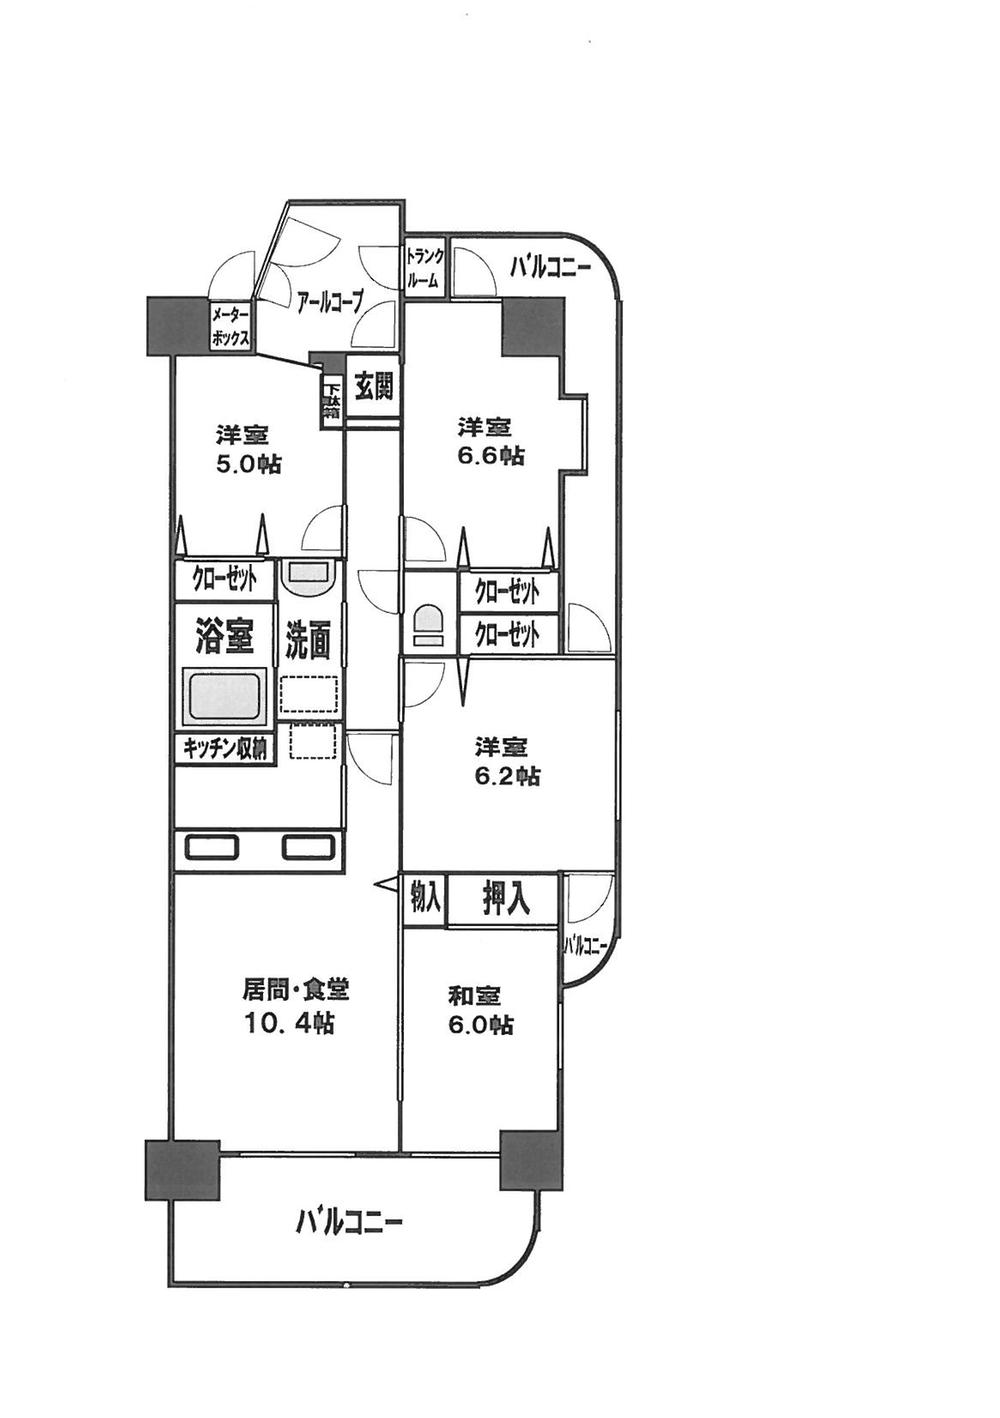 Floor plan. 4LDK, Price 19.9 million yen, Footprint 76.4 sq m , Balcony area 19.6 sq m